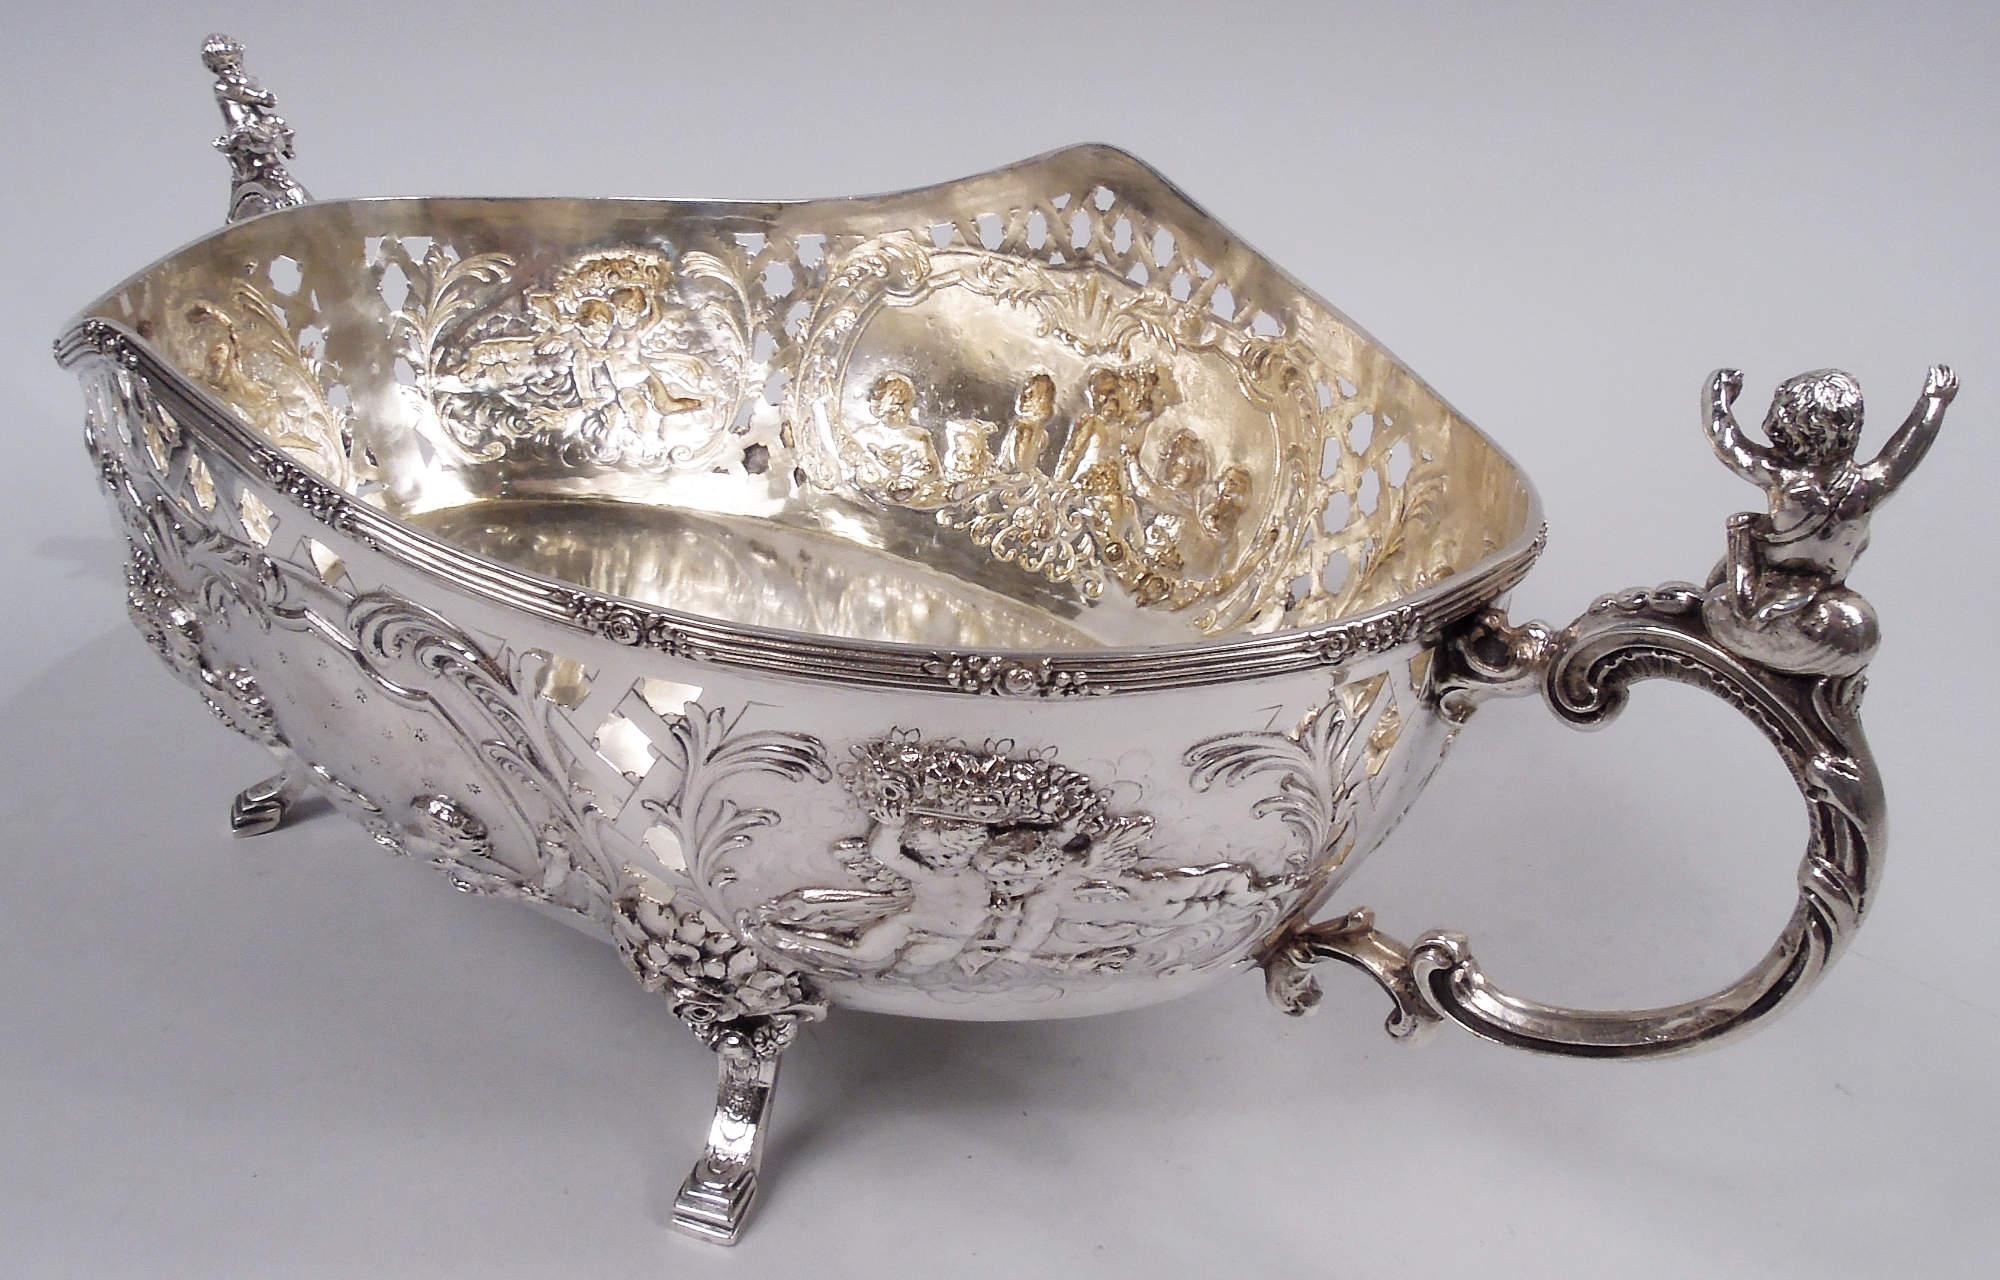 Neoclassical Revival Antique German Classical Silver Centerpiece Bowl C 1910 For Sale